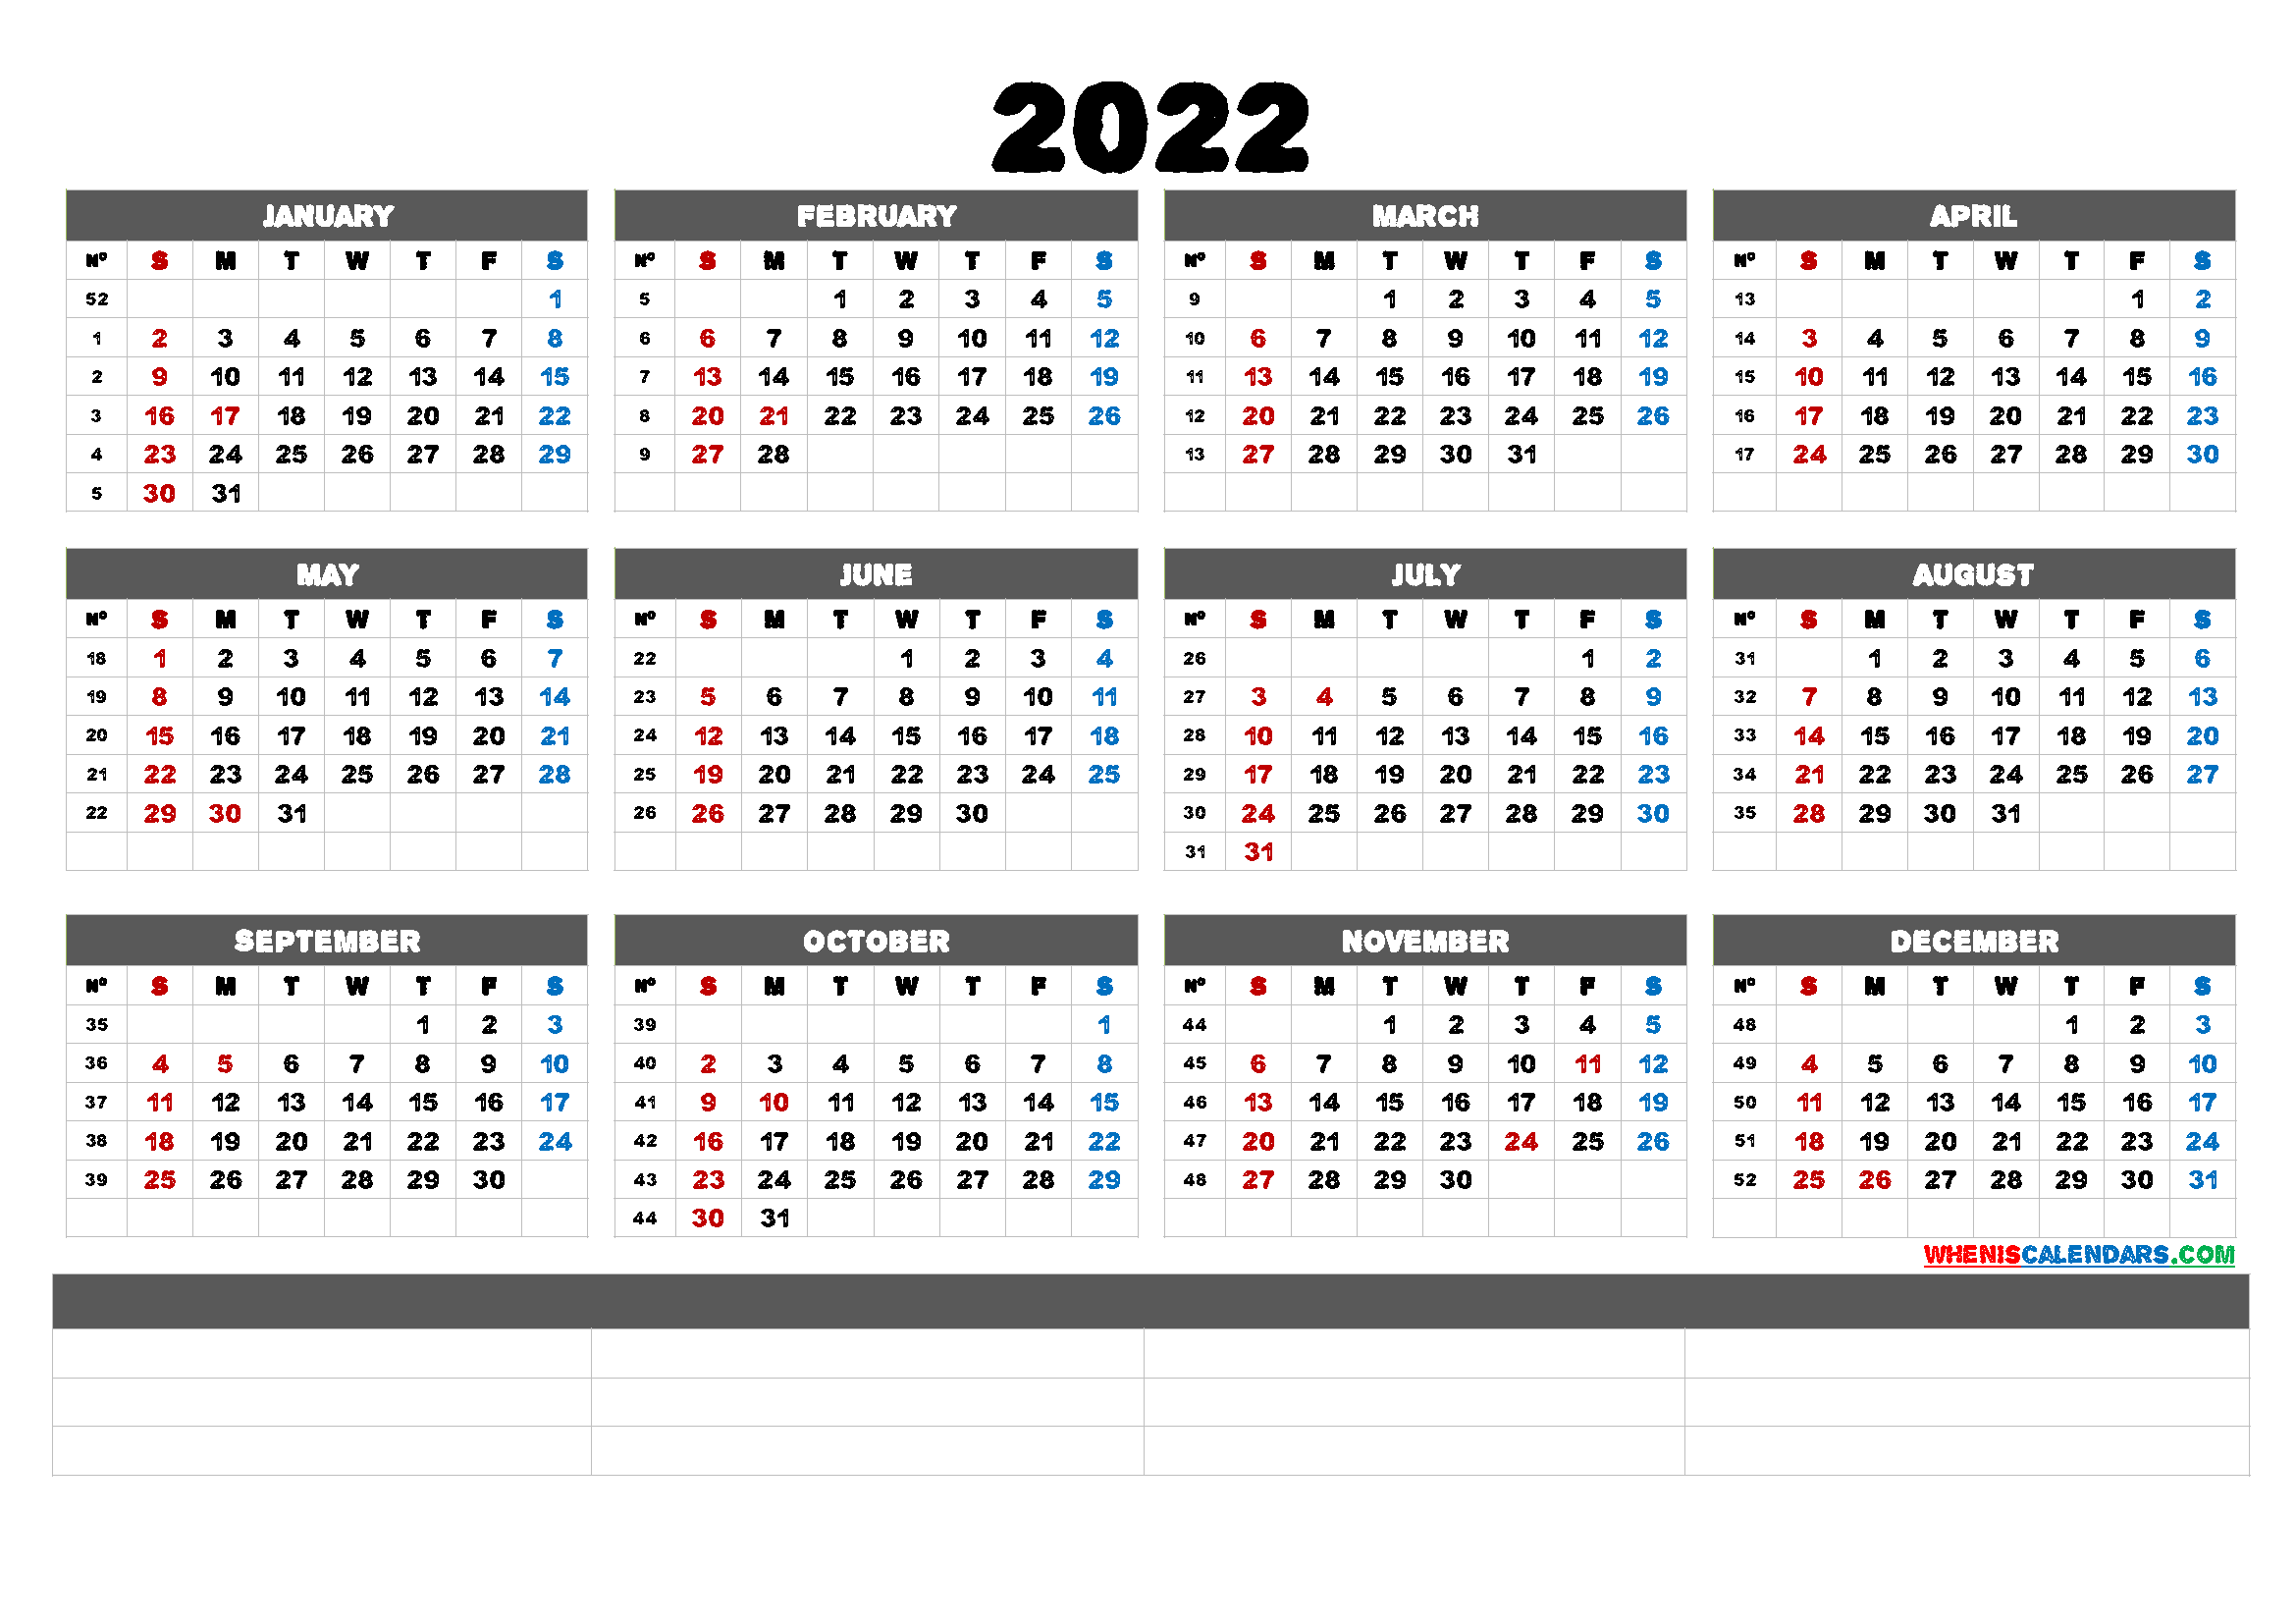 csustan-calendar-2023-printable-word-searches